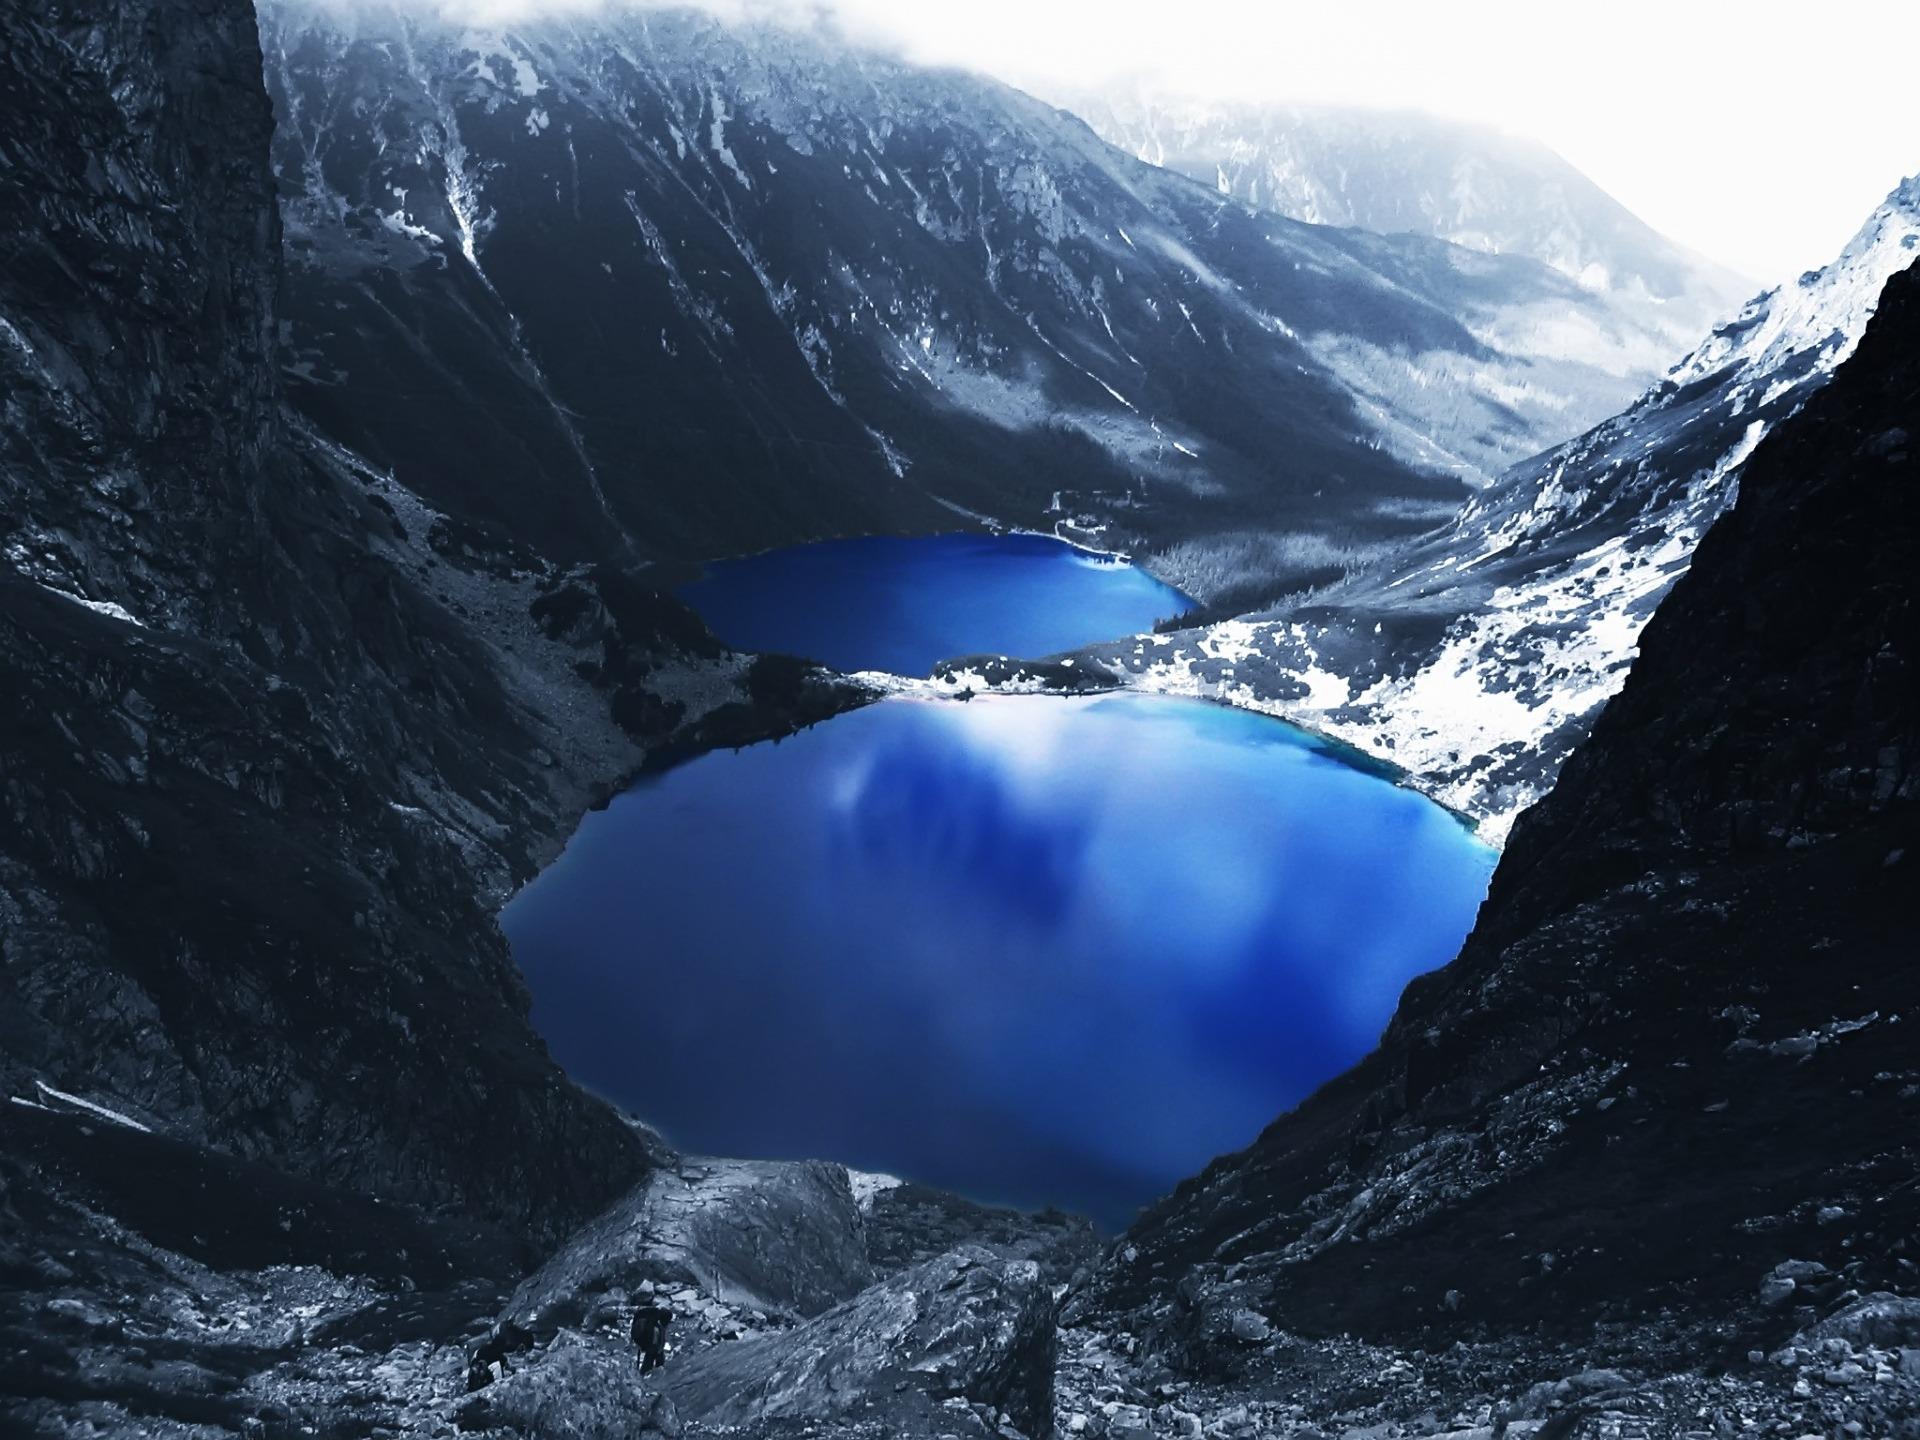 Mountain Lake Wallpaper Landscape Nature Wallpaper in jpg format for free download